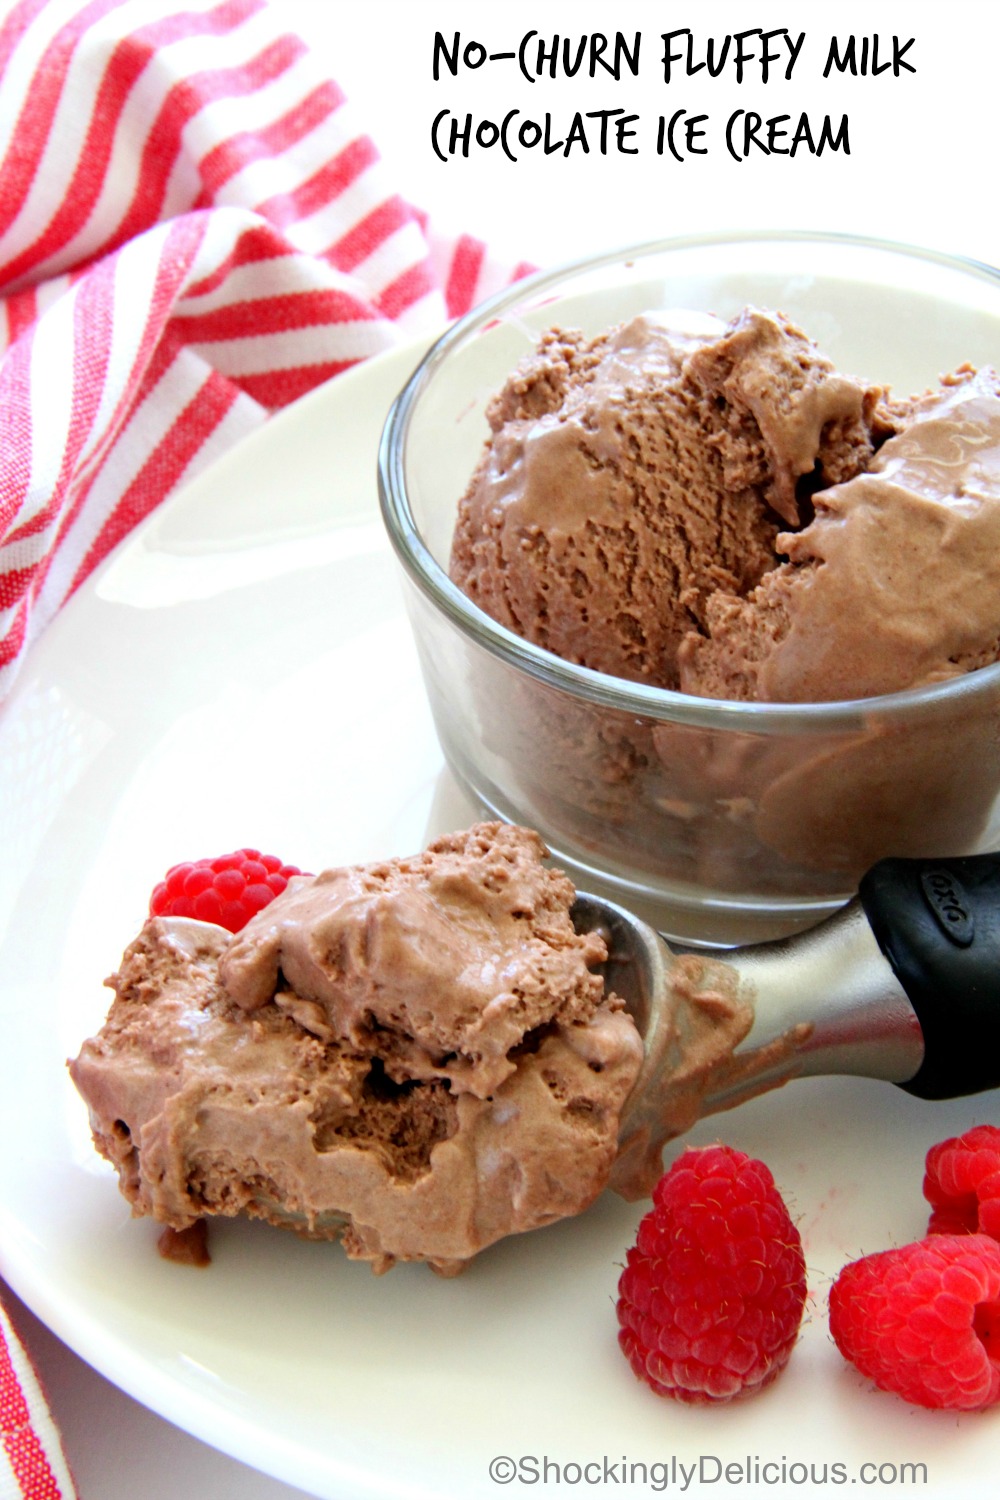 No-Churn Fluffy Milk Chocolate Ice Cream recipe by Dorothy Reinhold